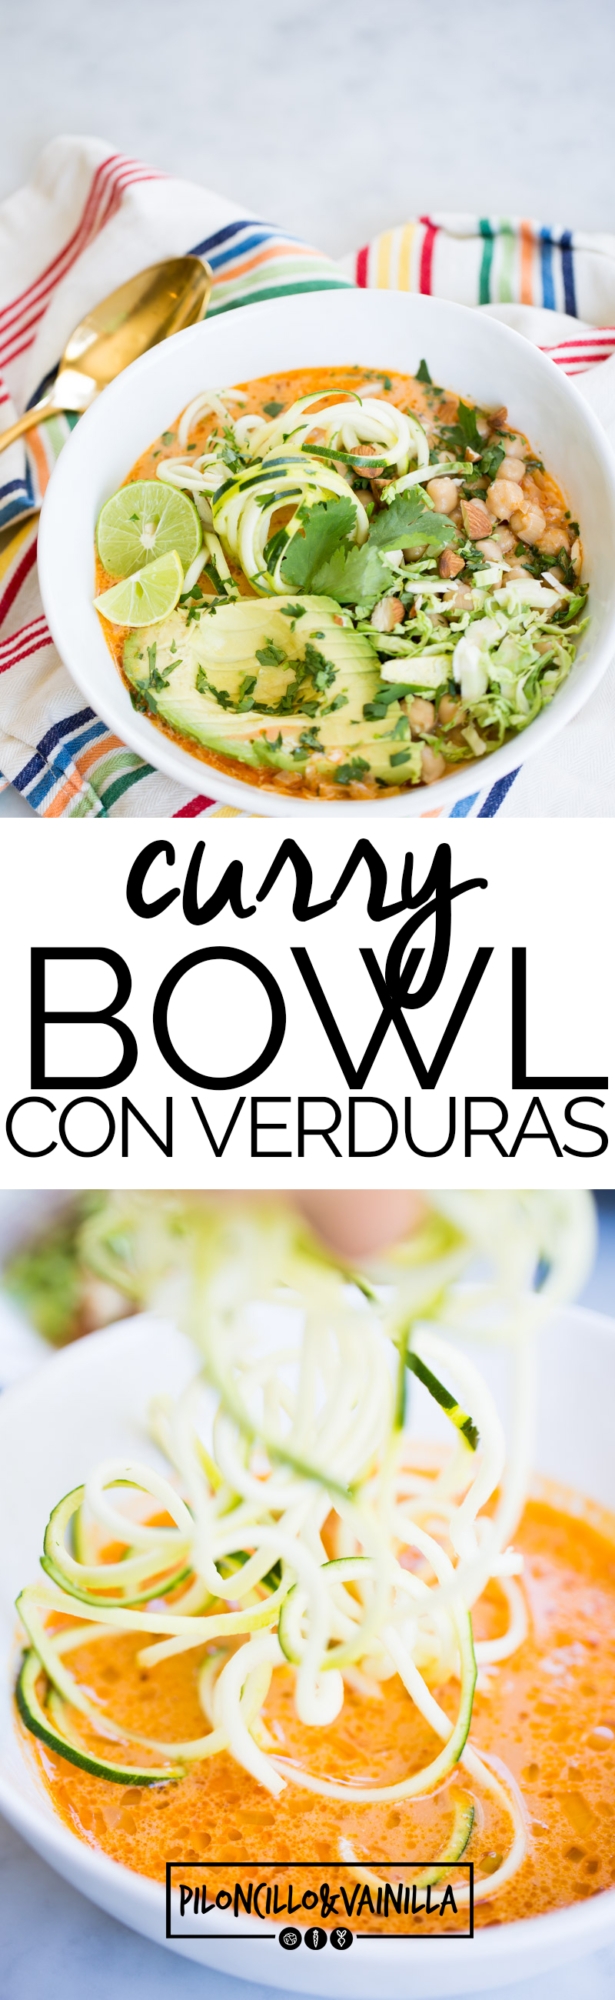 Curry rojo con verduras en 5 minutos